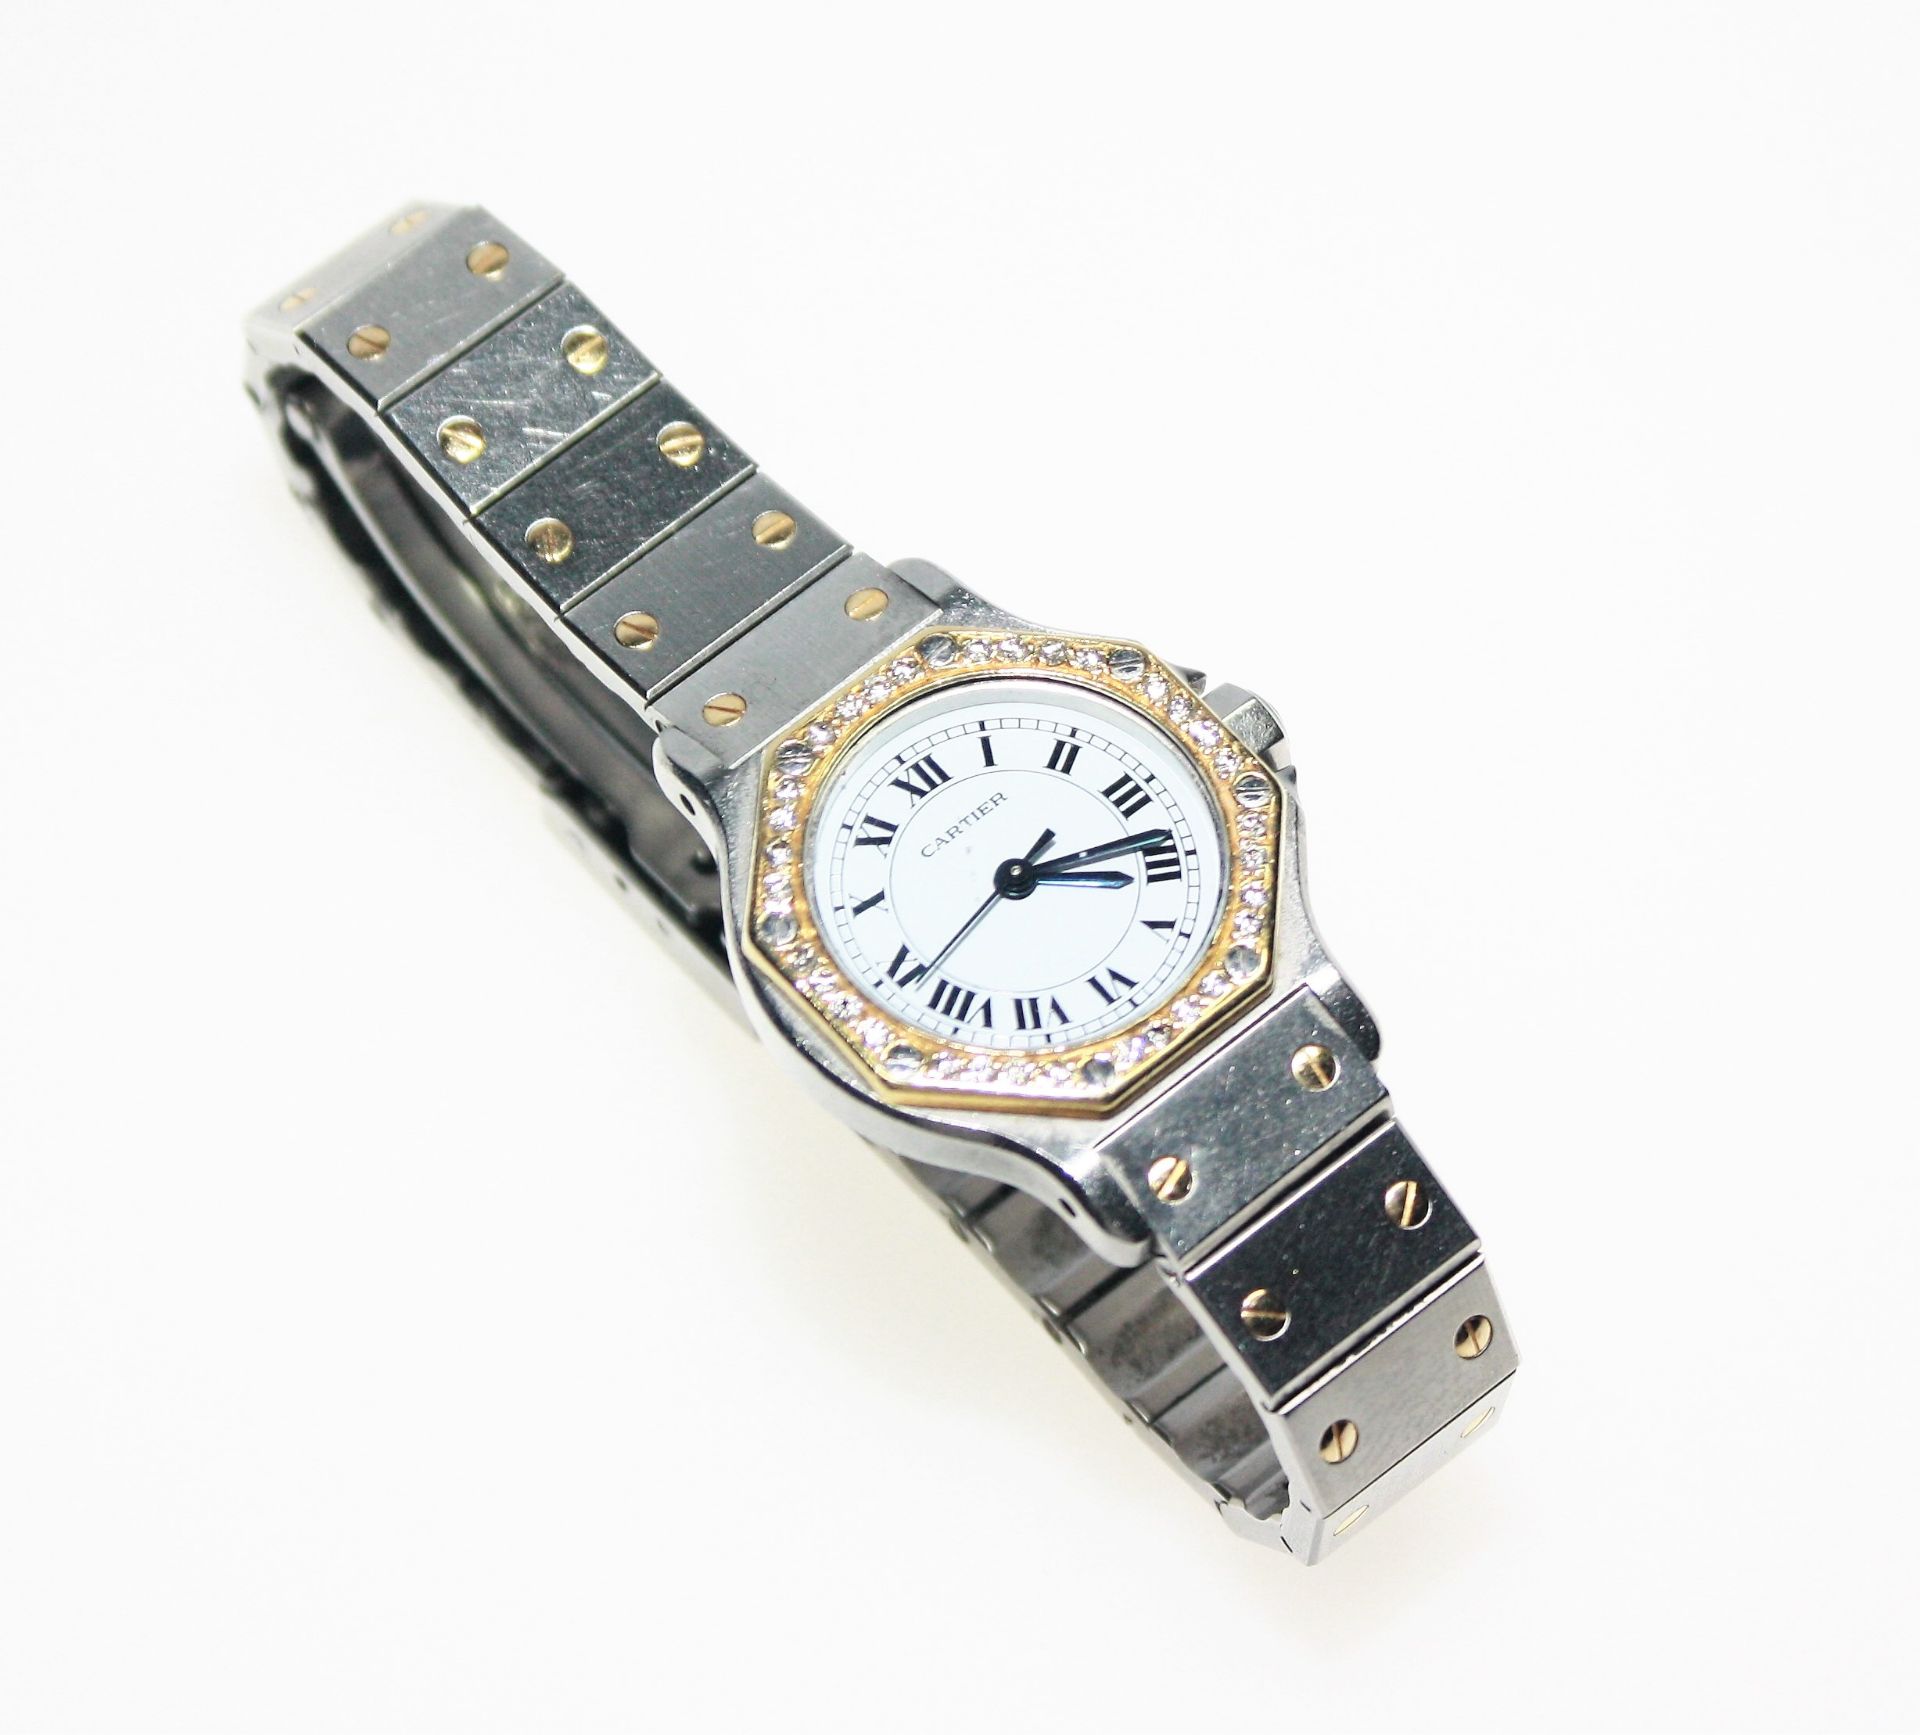 Damen-Armbanduhr Stahl/Gold Cartier, rundes, weißes Zifferblatt mit römischen Ziffern, umgeben von